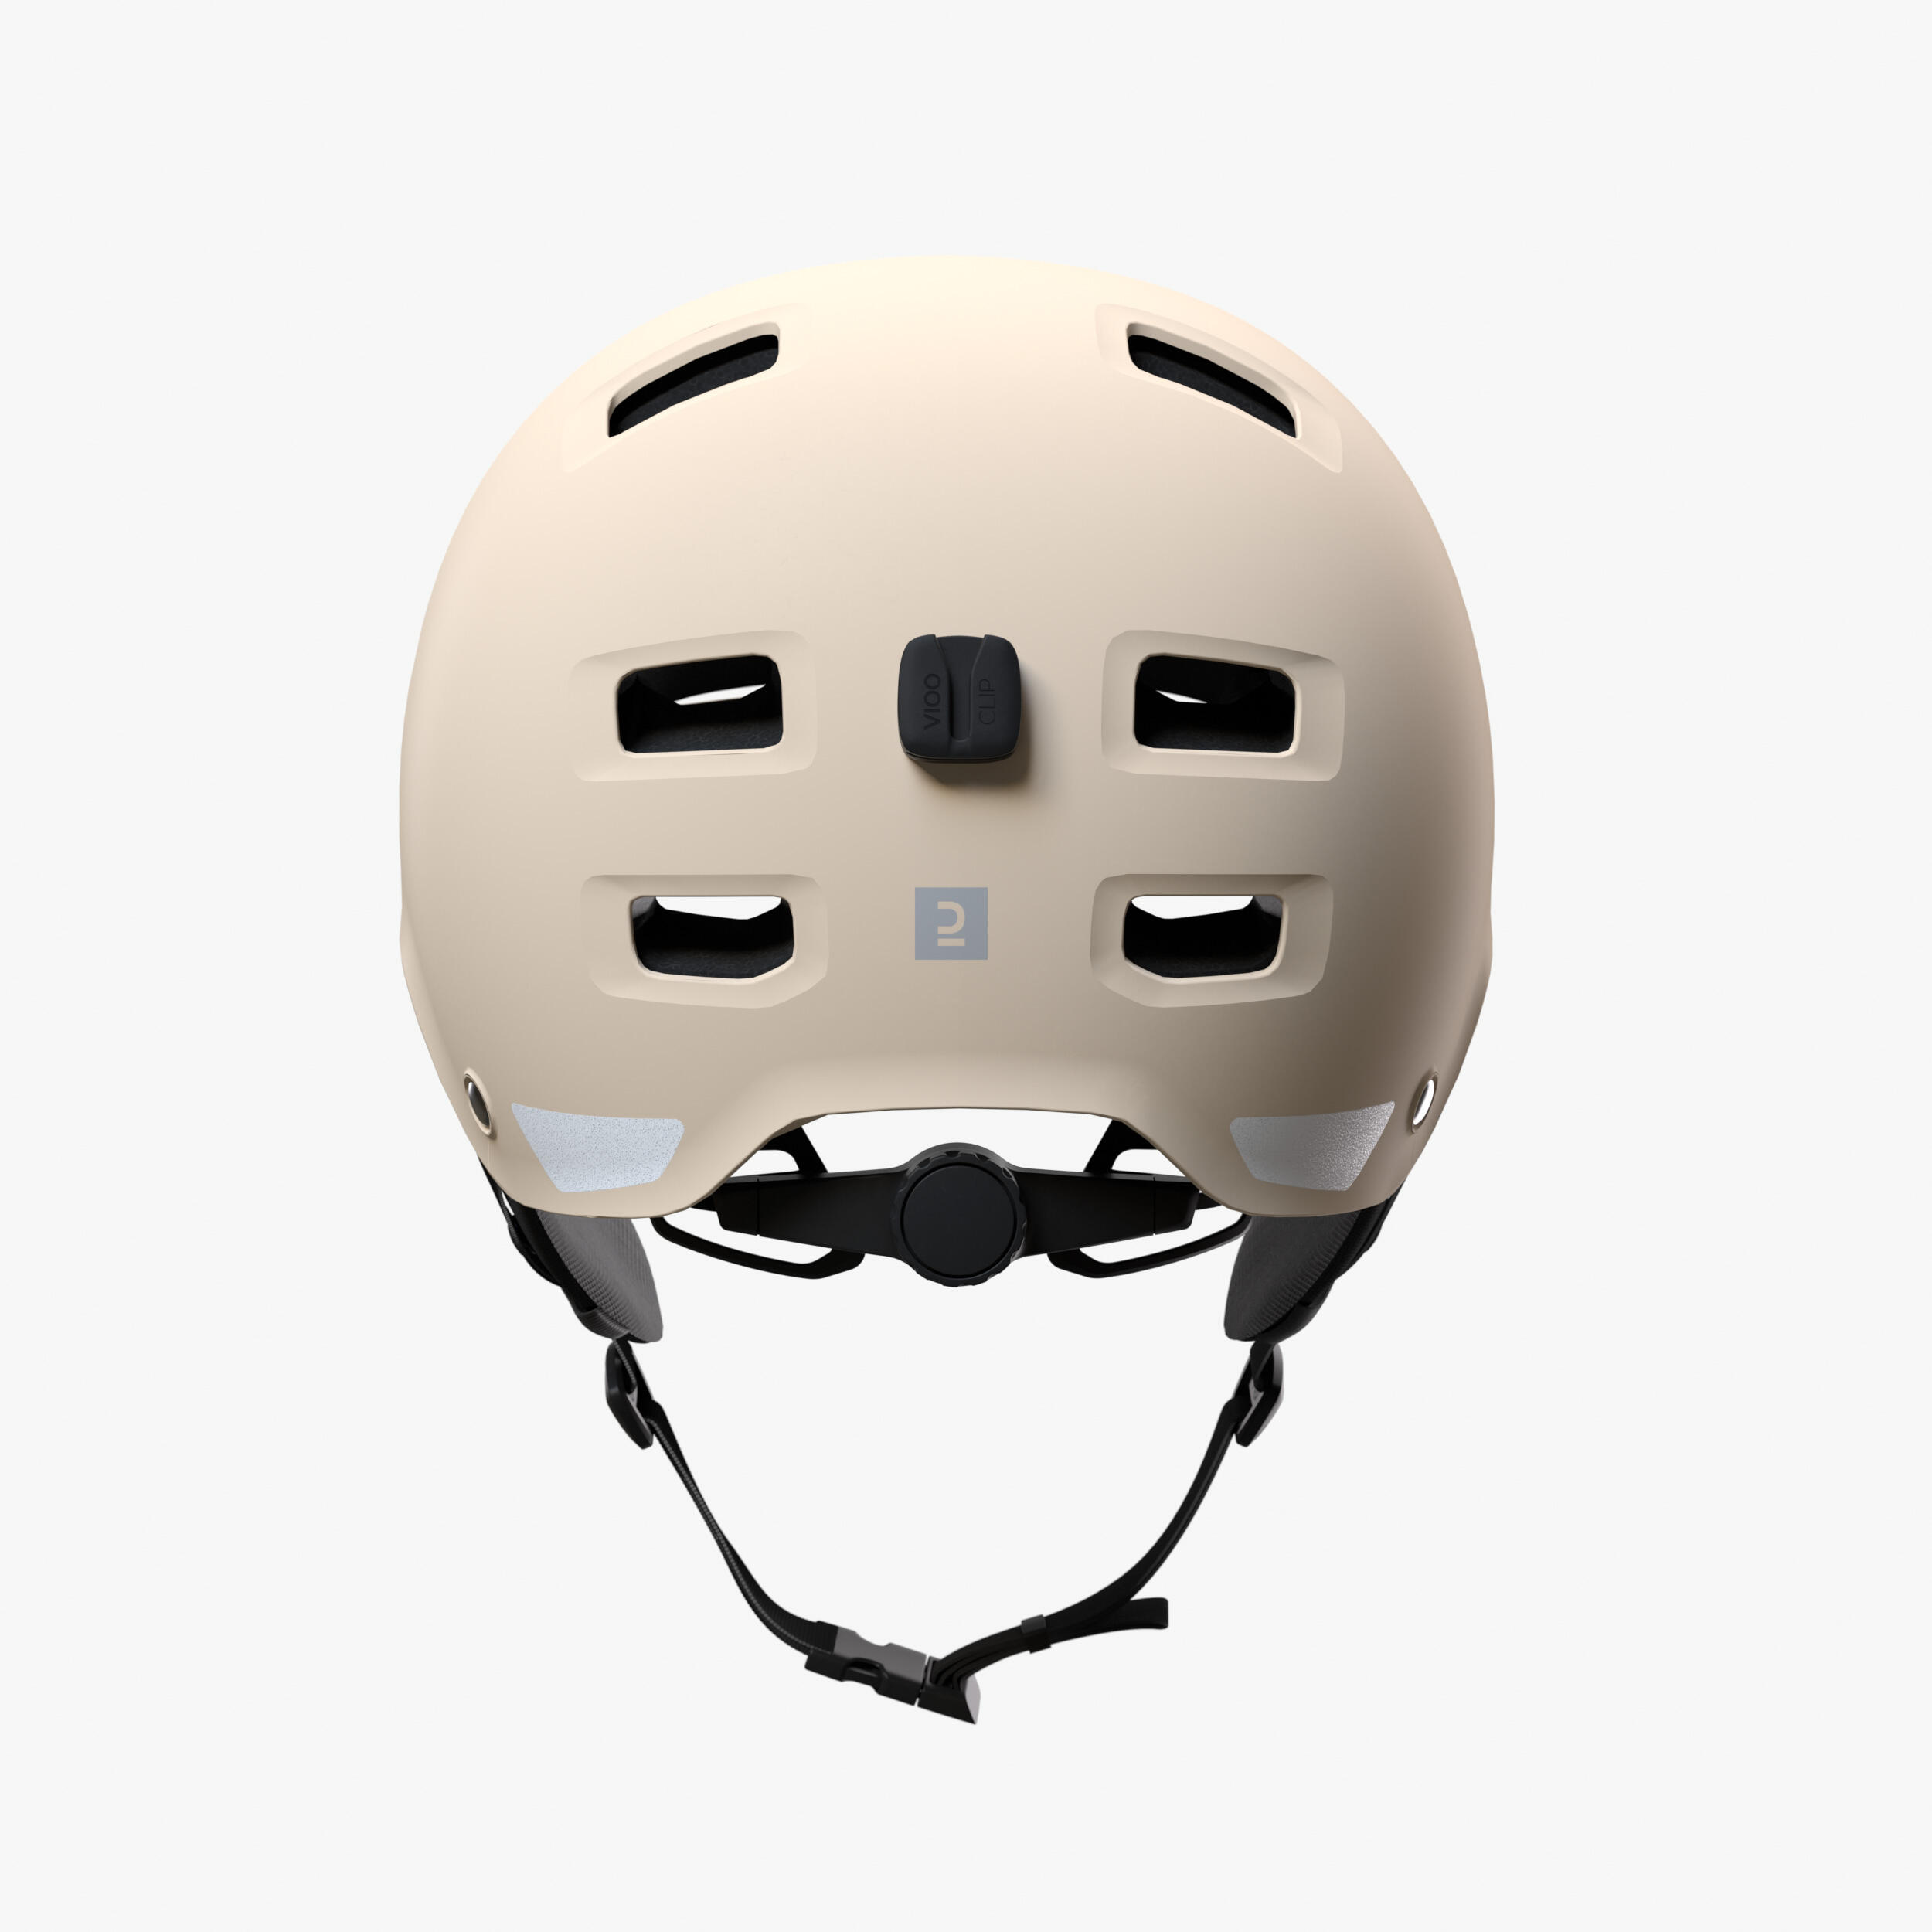 City Cycling Bowl Helmet - Beige 5/9